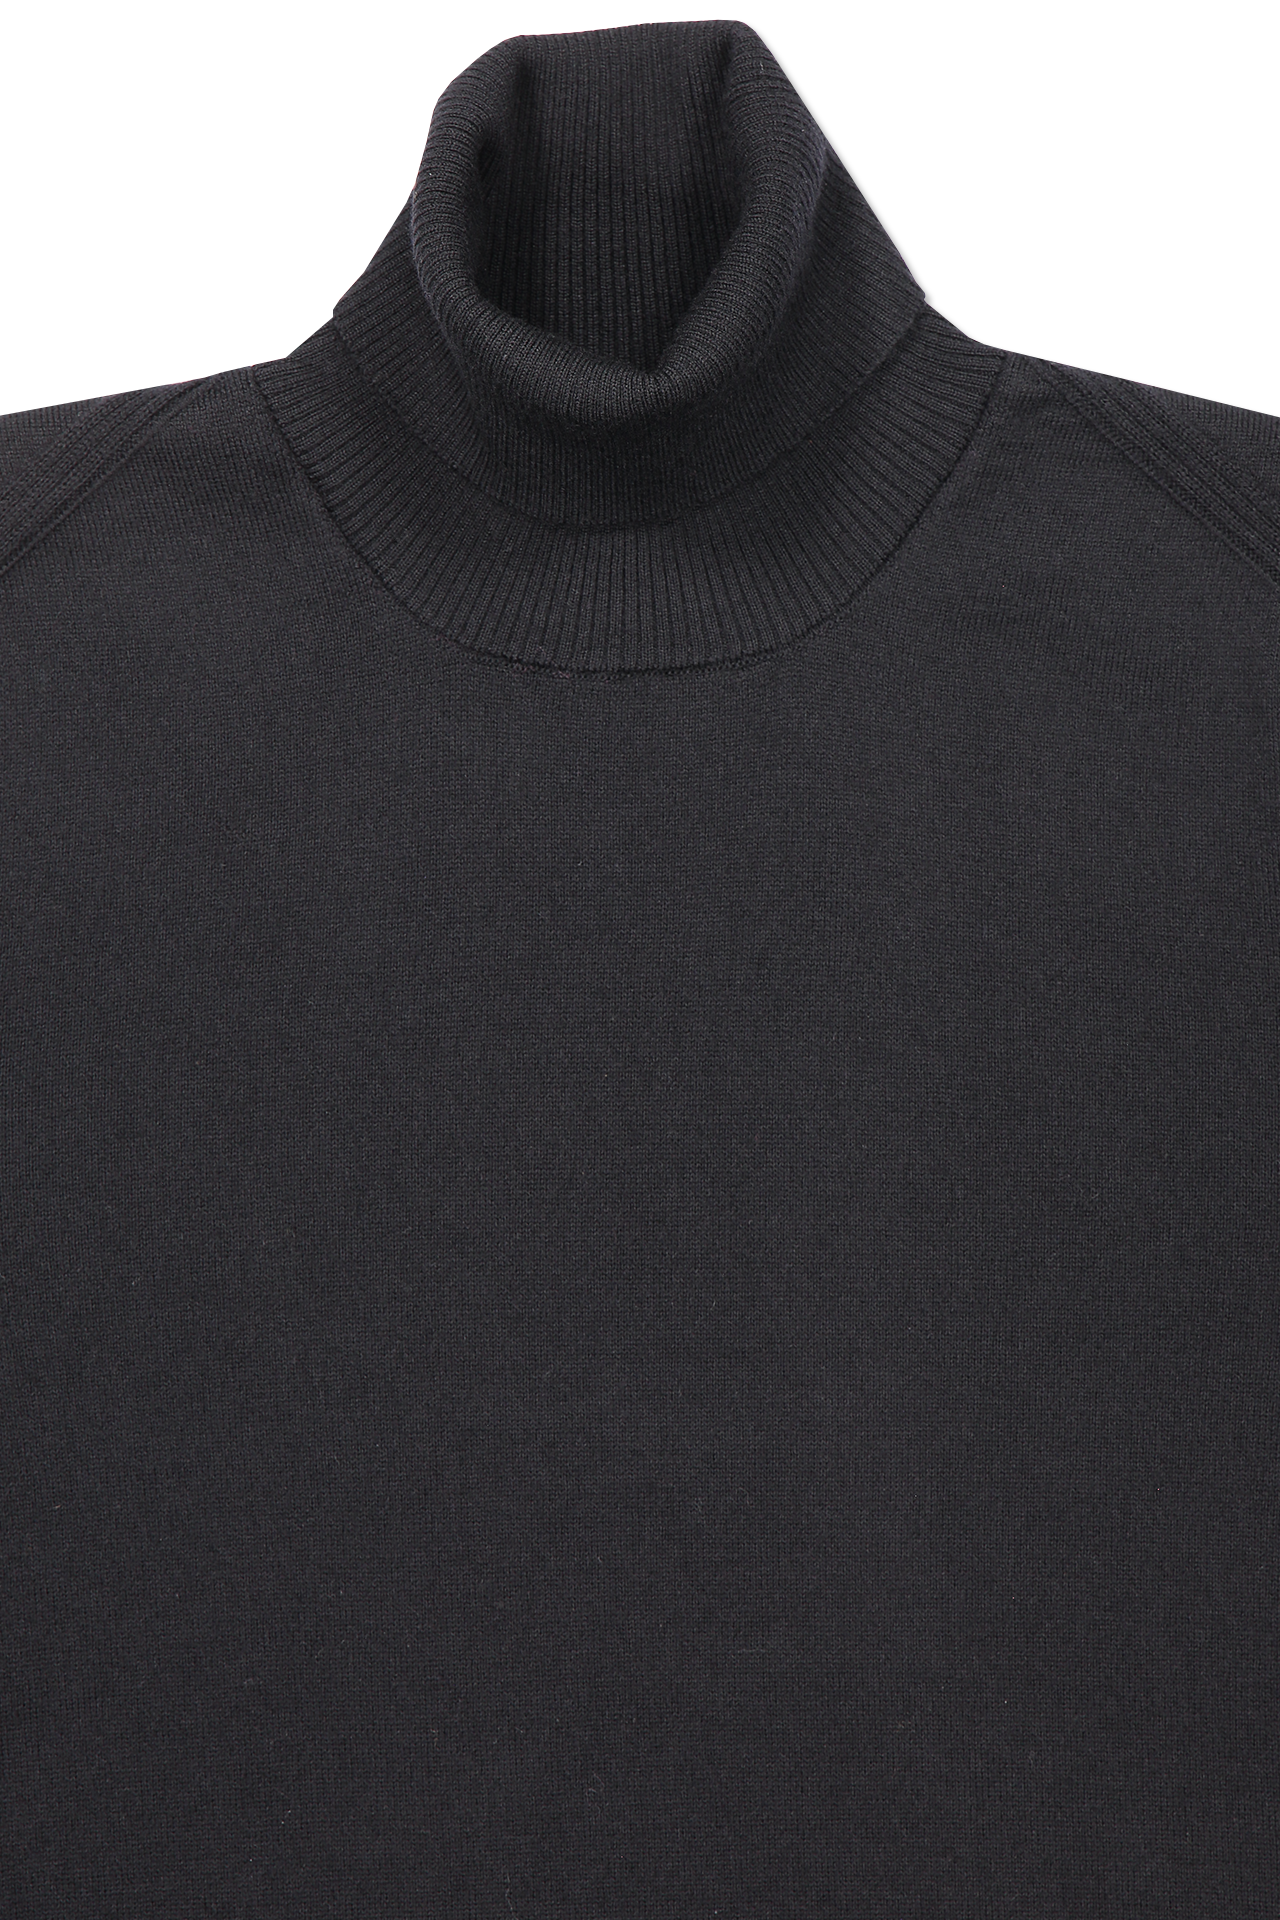 Stone Island Light Wool Turtleneck Black | Men's Sweater | A.K. Rikk's